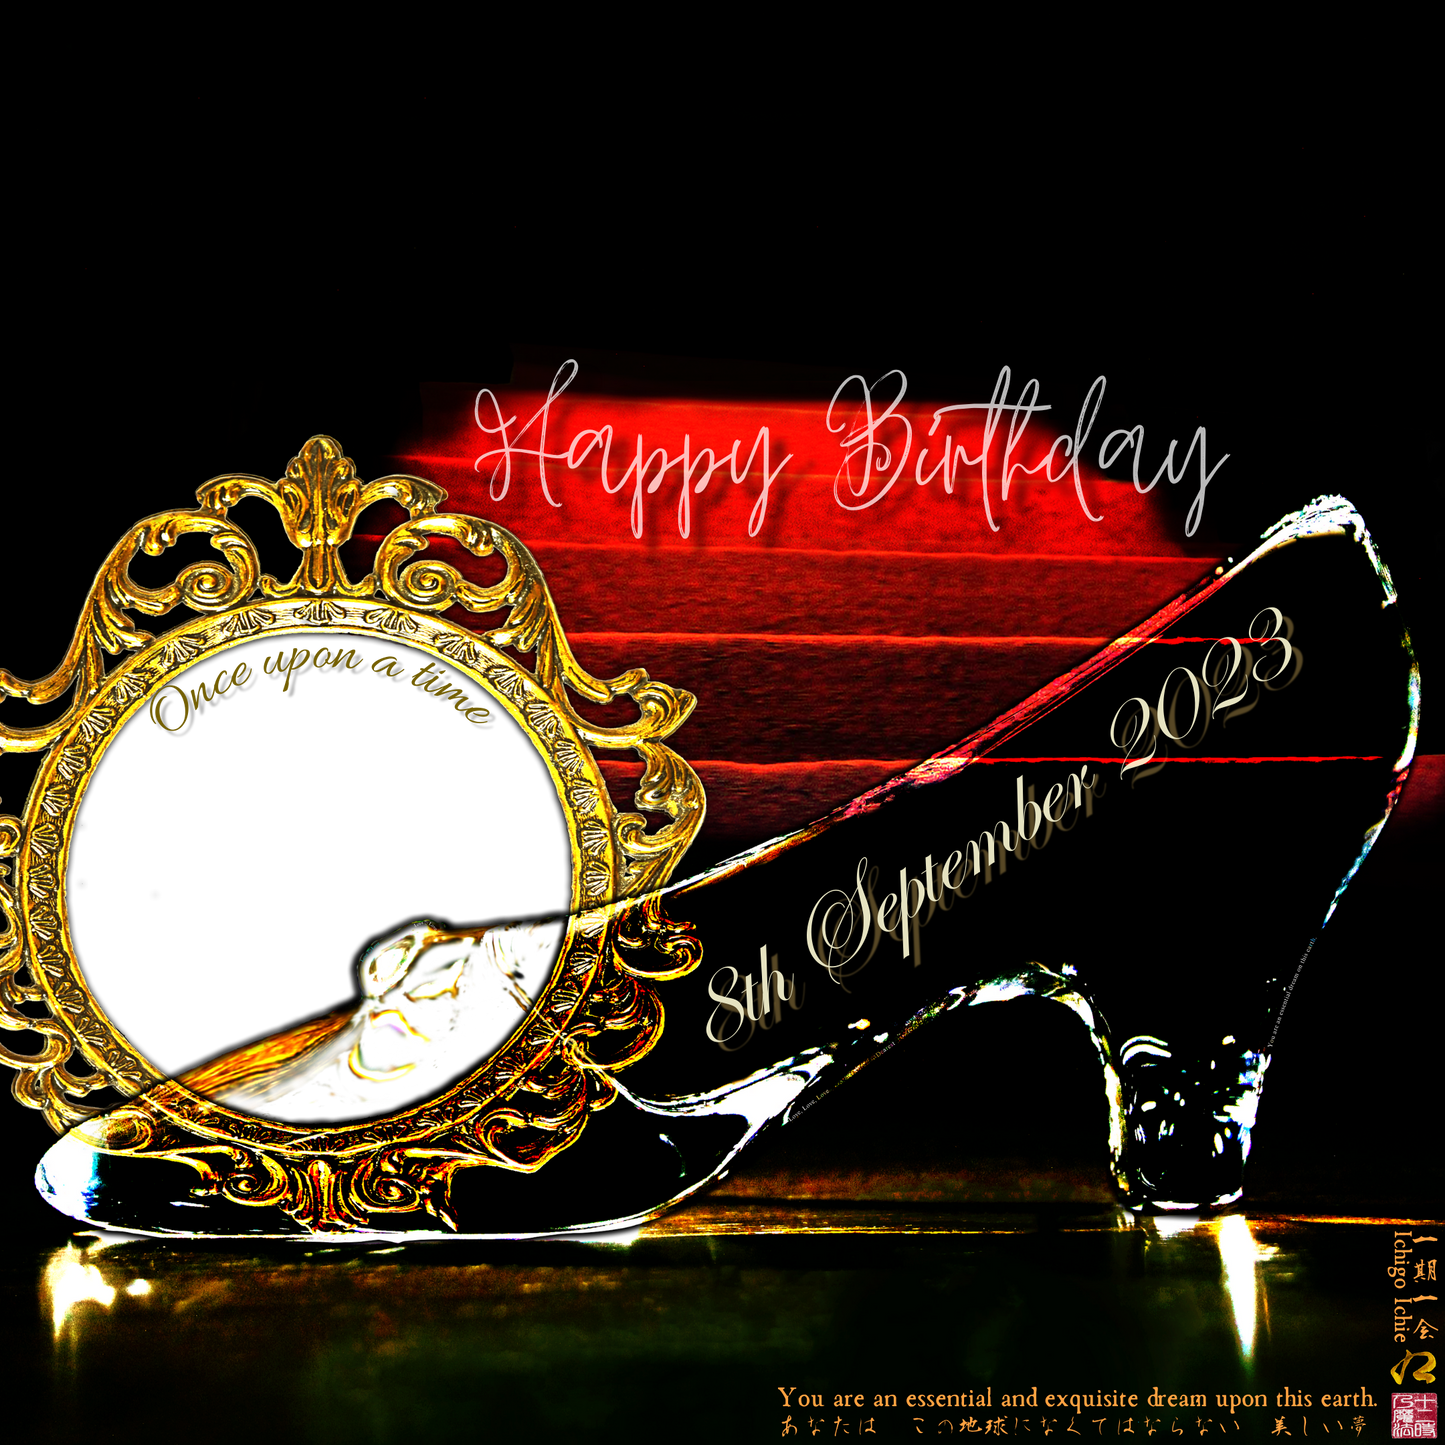 Happy Birthday Glass Slipper "Ichigo Ichie" 8th September 2023 the Left (1-of-1) NFT Art